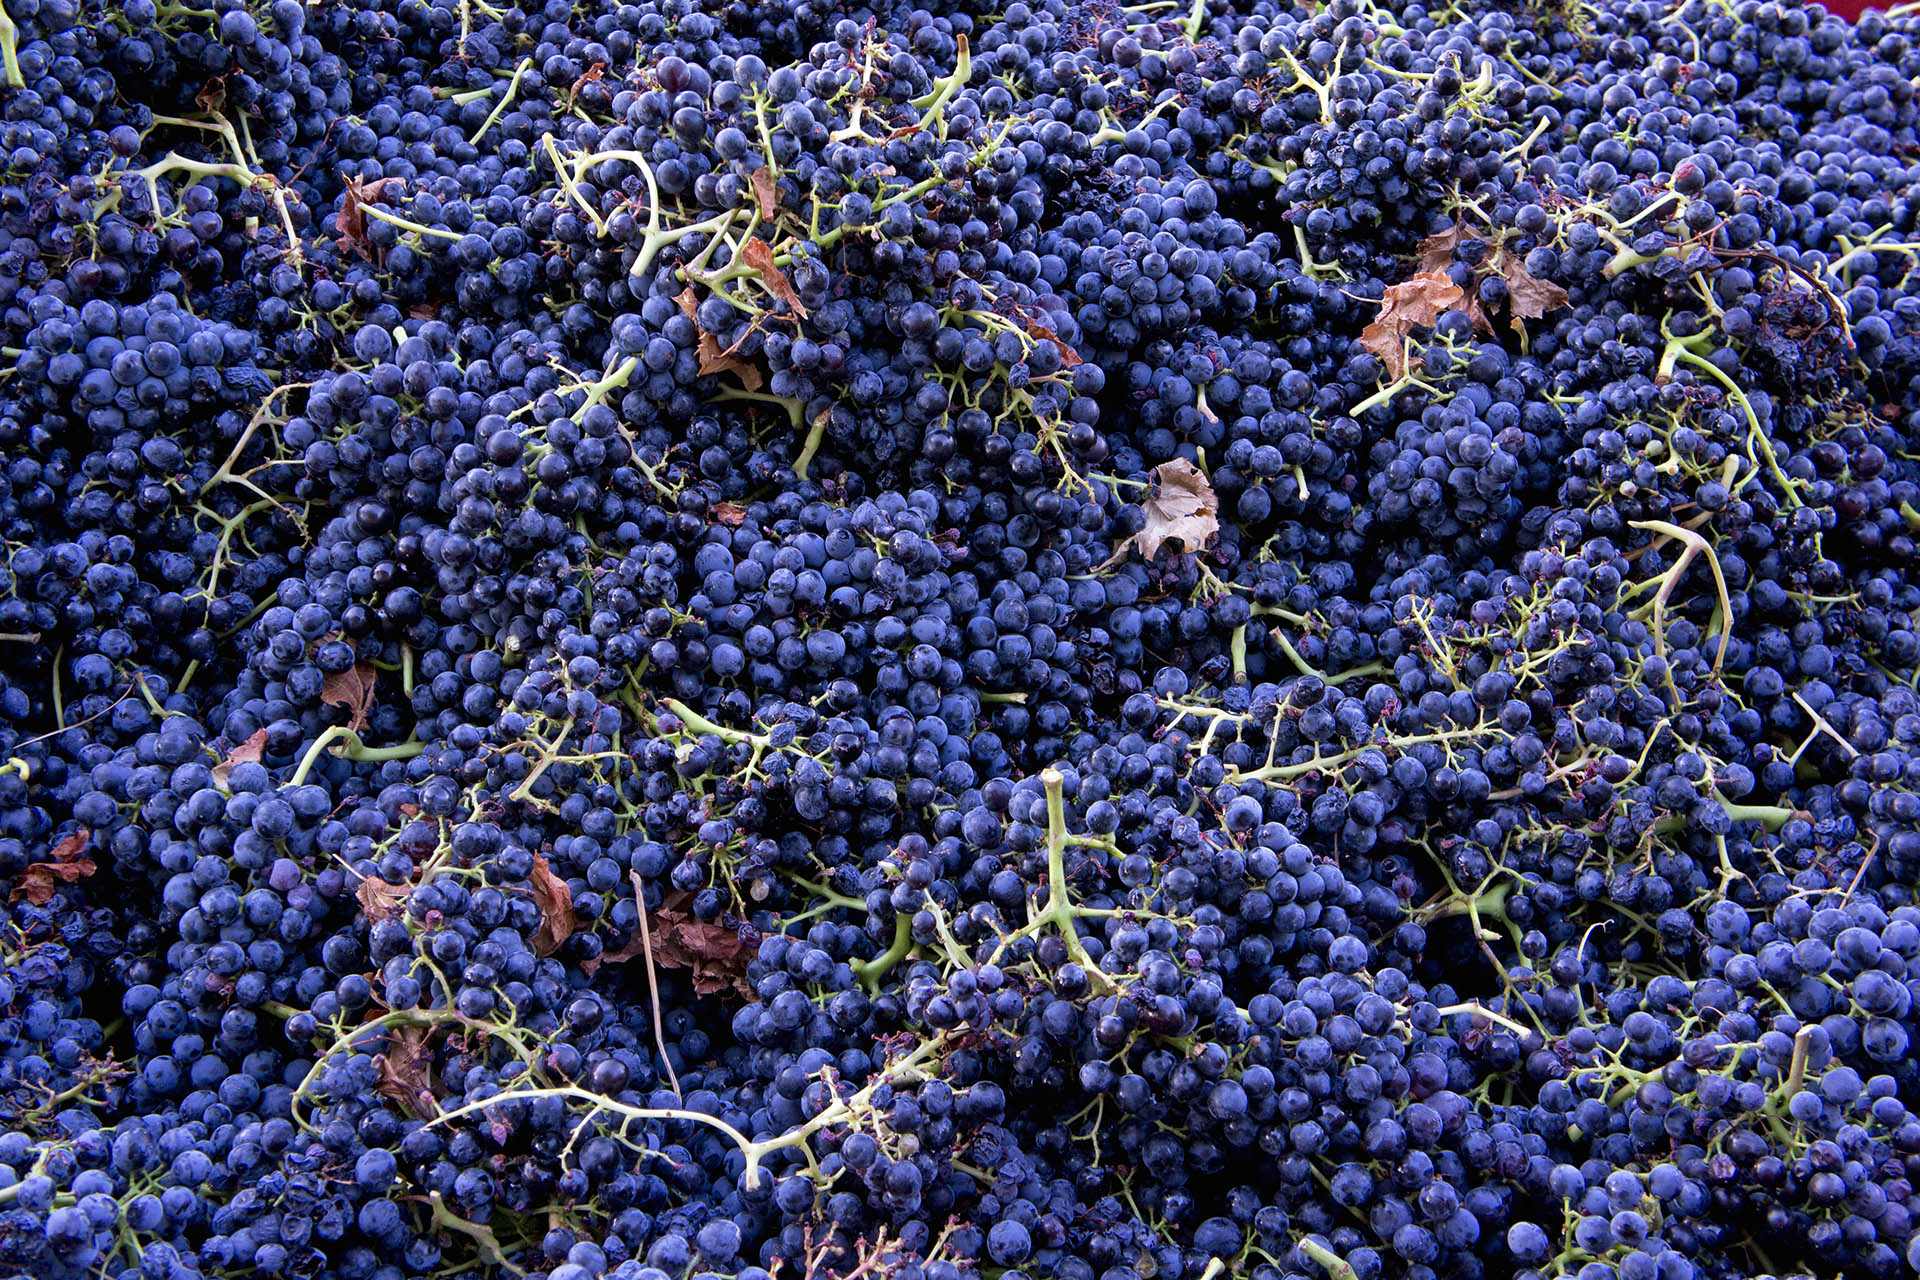 Harvested black grapes